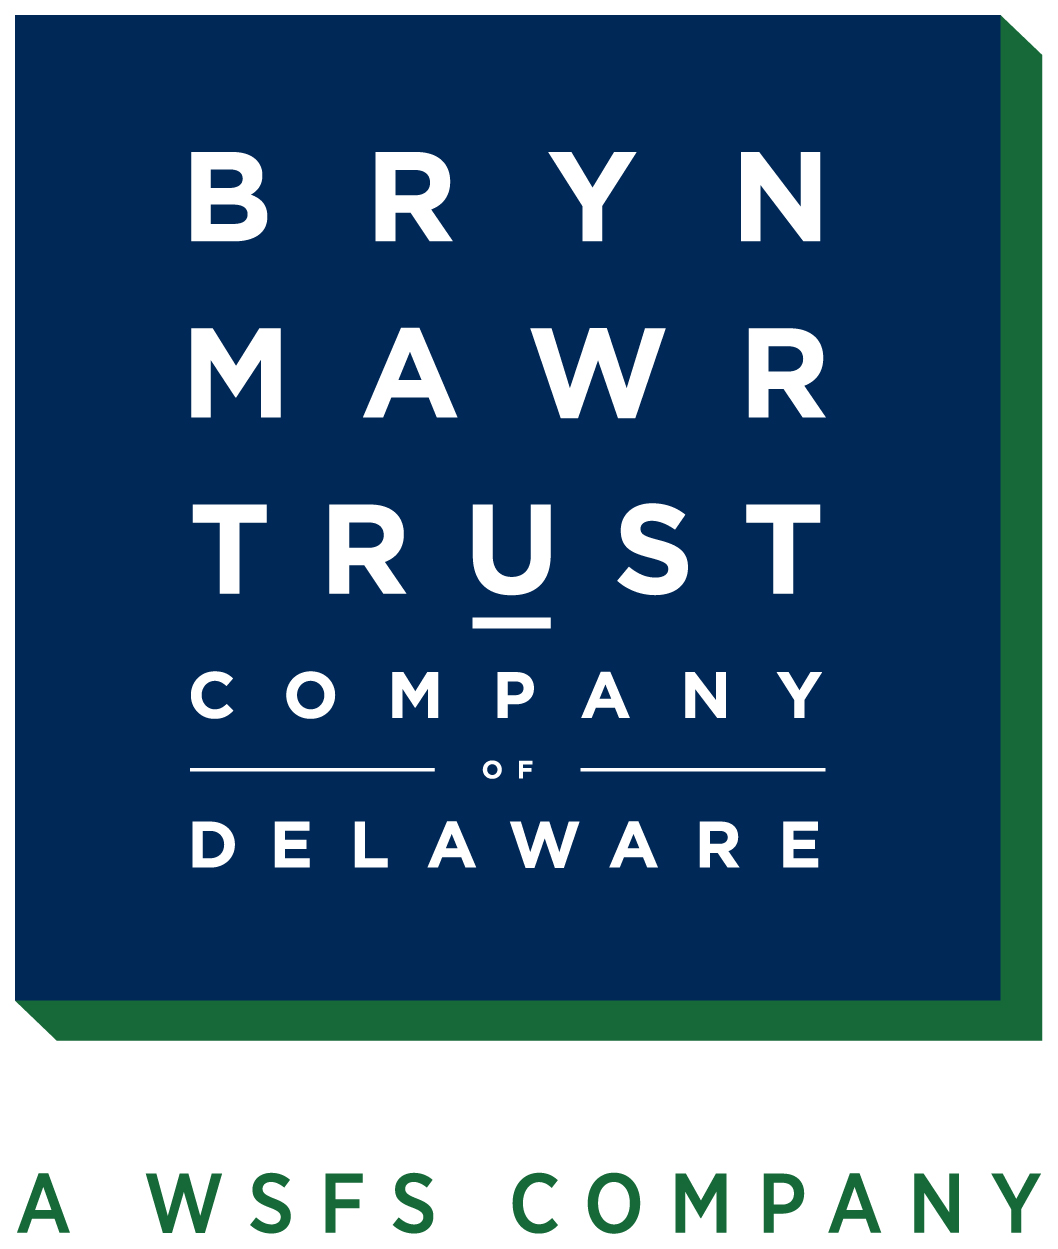 The Bryn Mawr Trust Company of Delaware